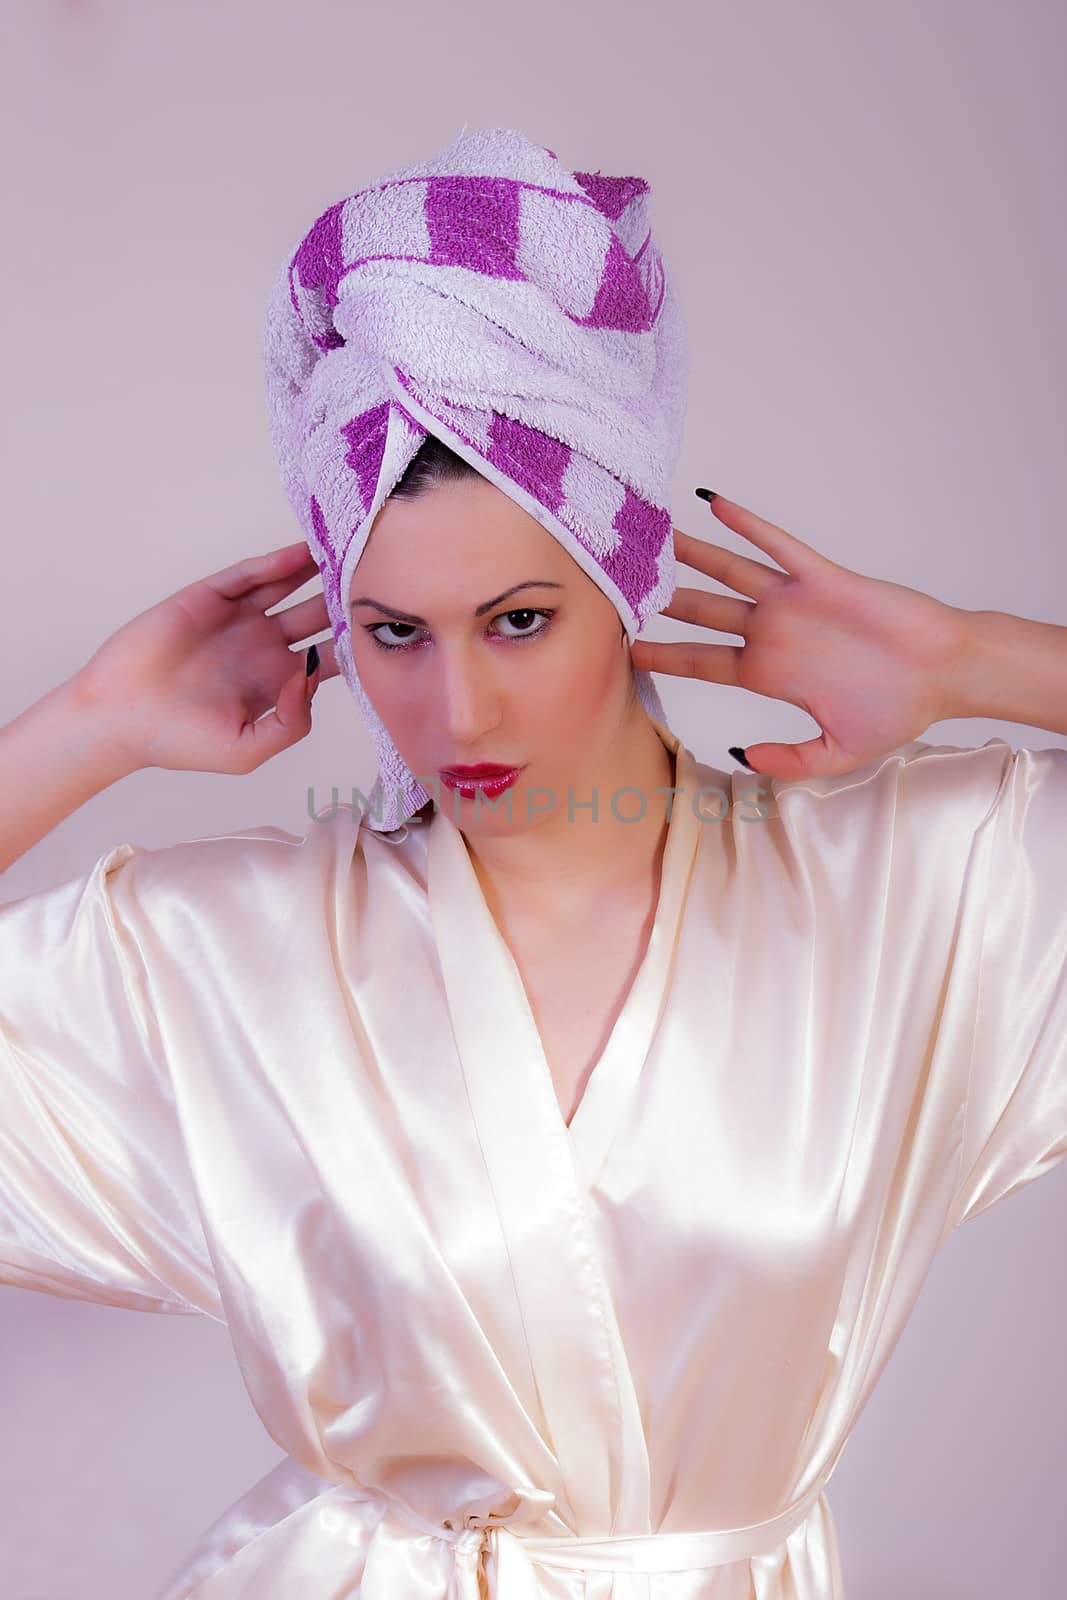 Beautiful woman with a towel on her head by dukibu